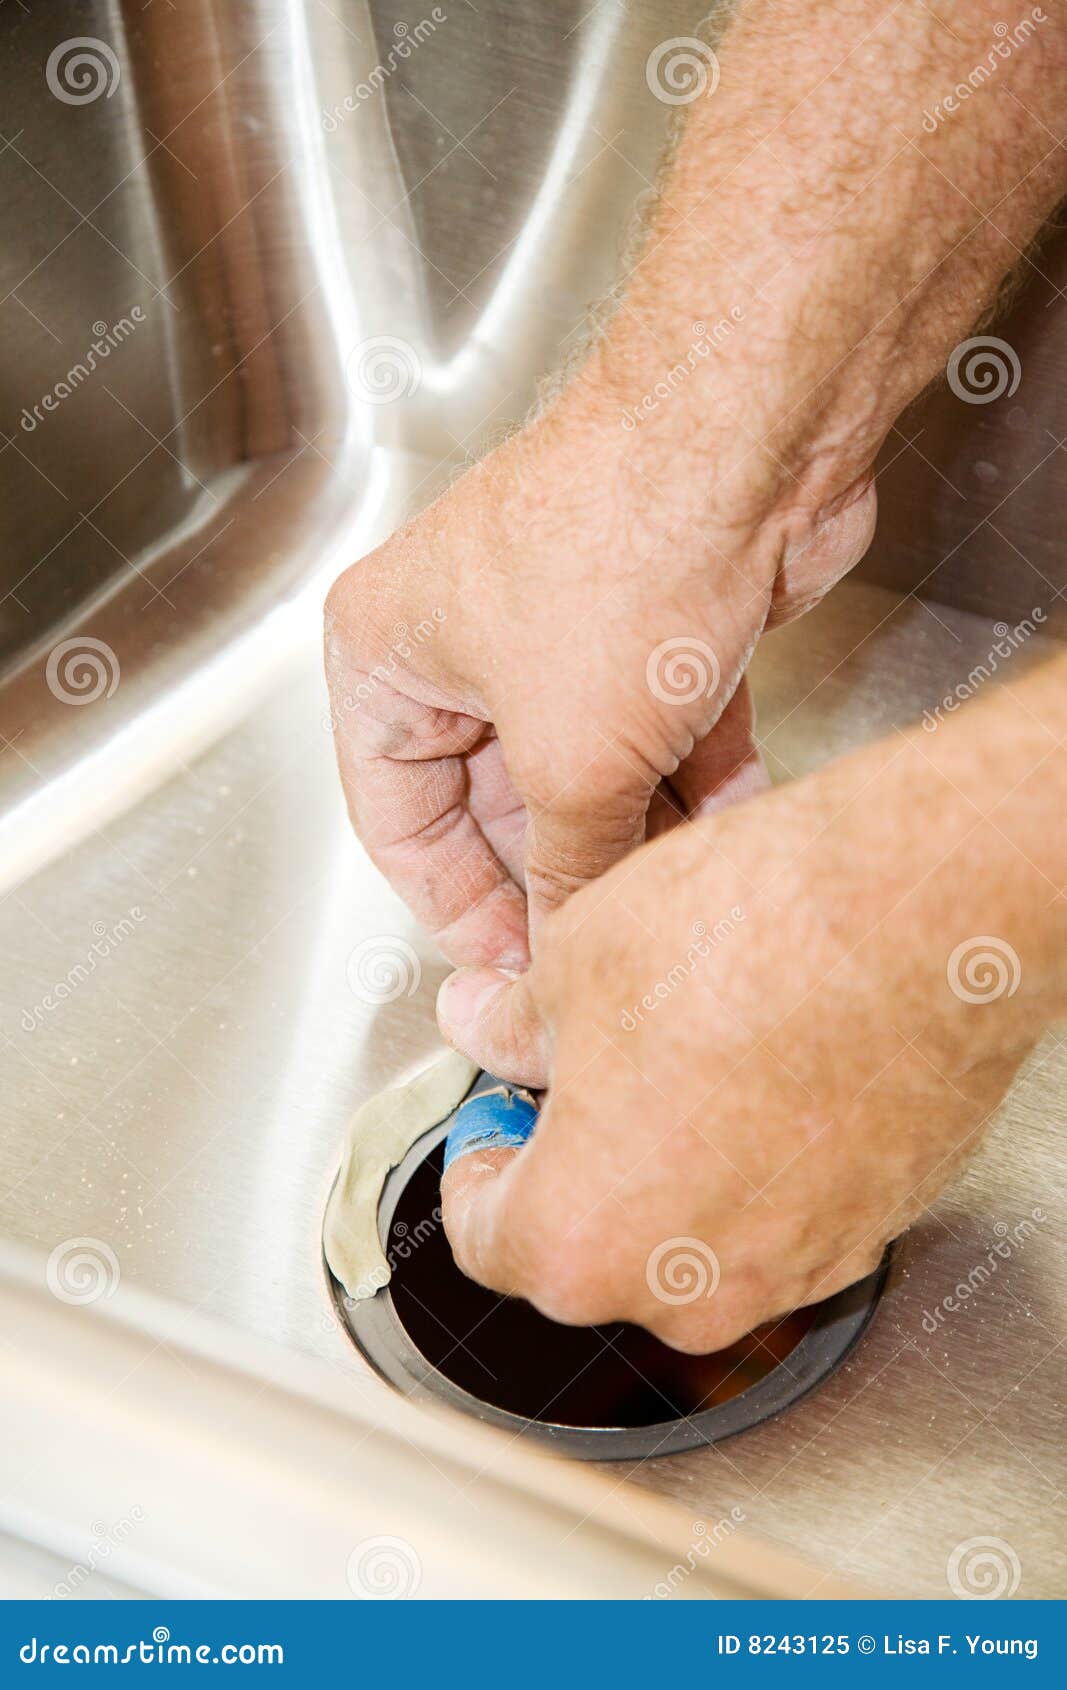 Applying Plumbers Putty Stock Image Image Of Nstalling